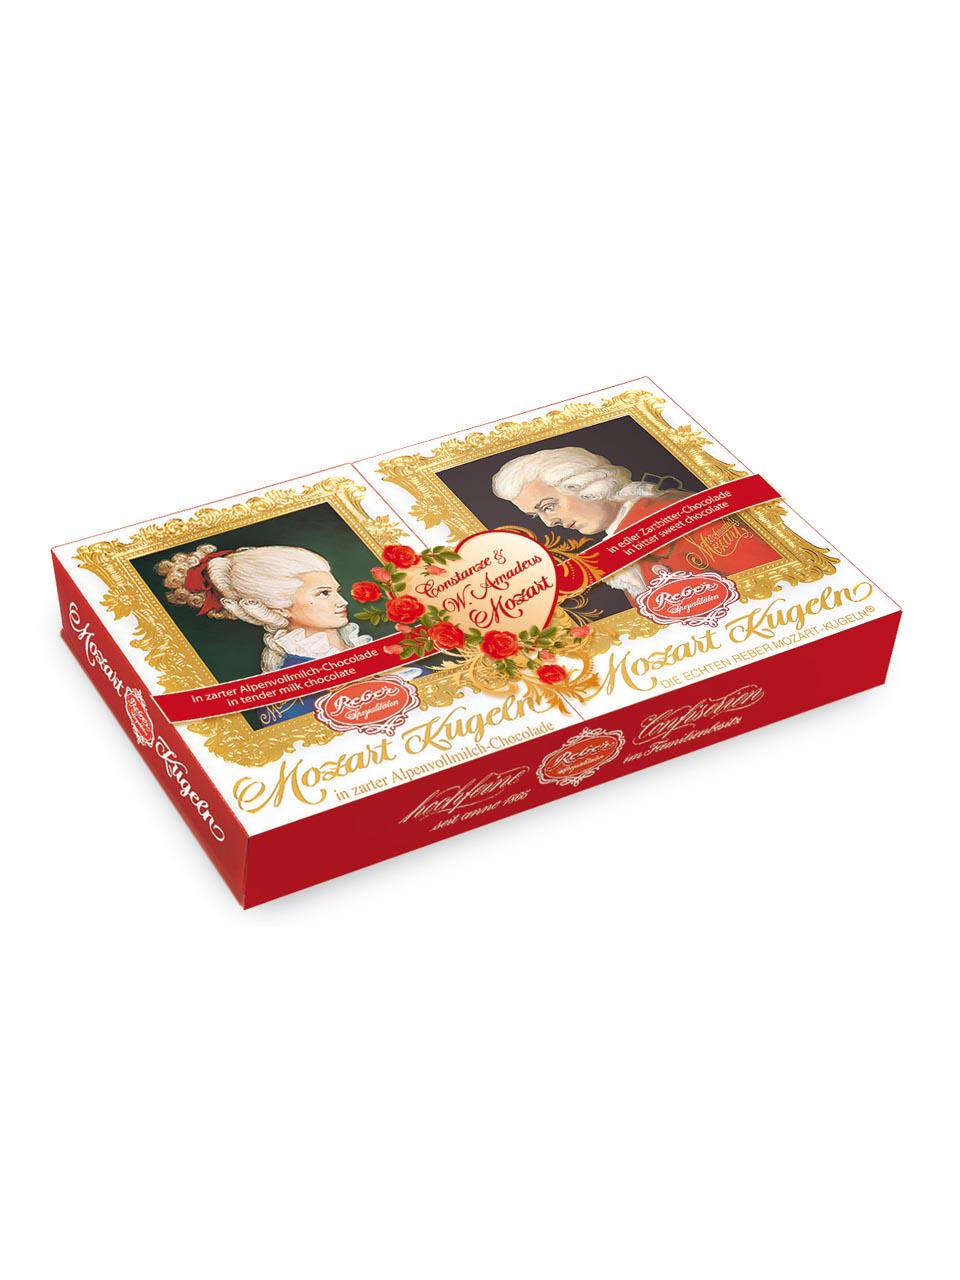 Reber Mozart Kugel in Wolfgang Amadeus Mozart Small Portrait Box 6 pc. 4.2  oz. - The Taste of Germany